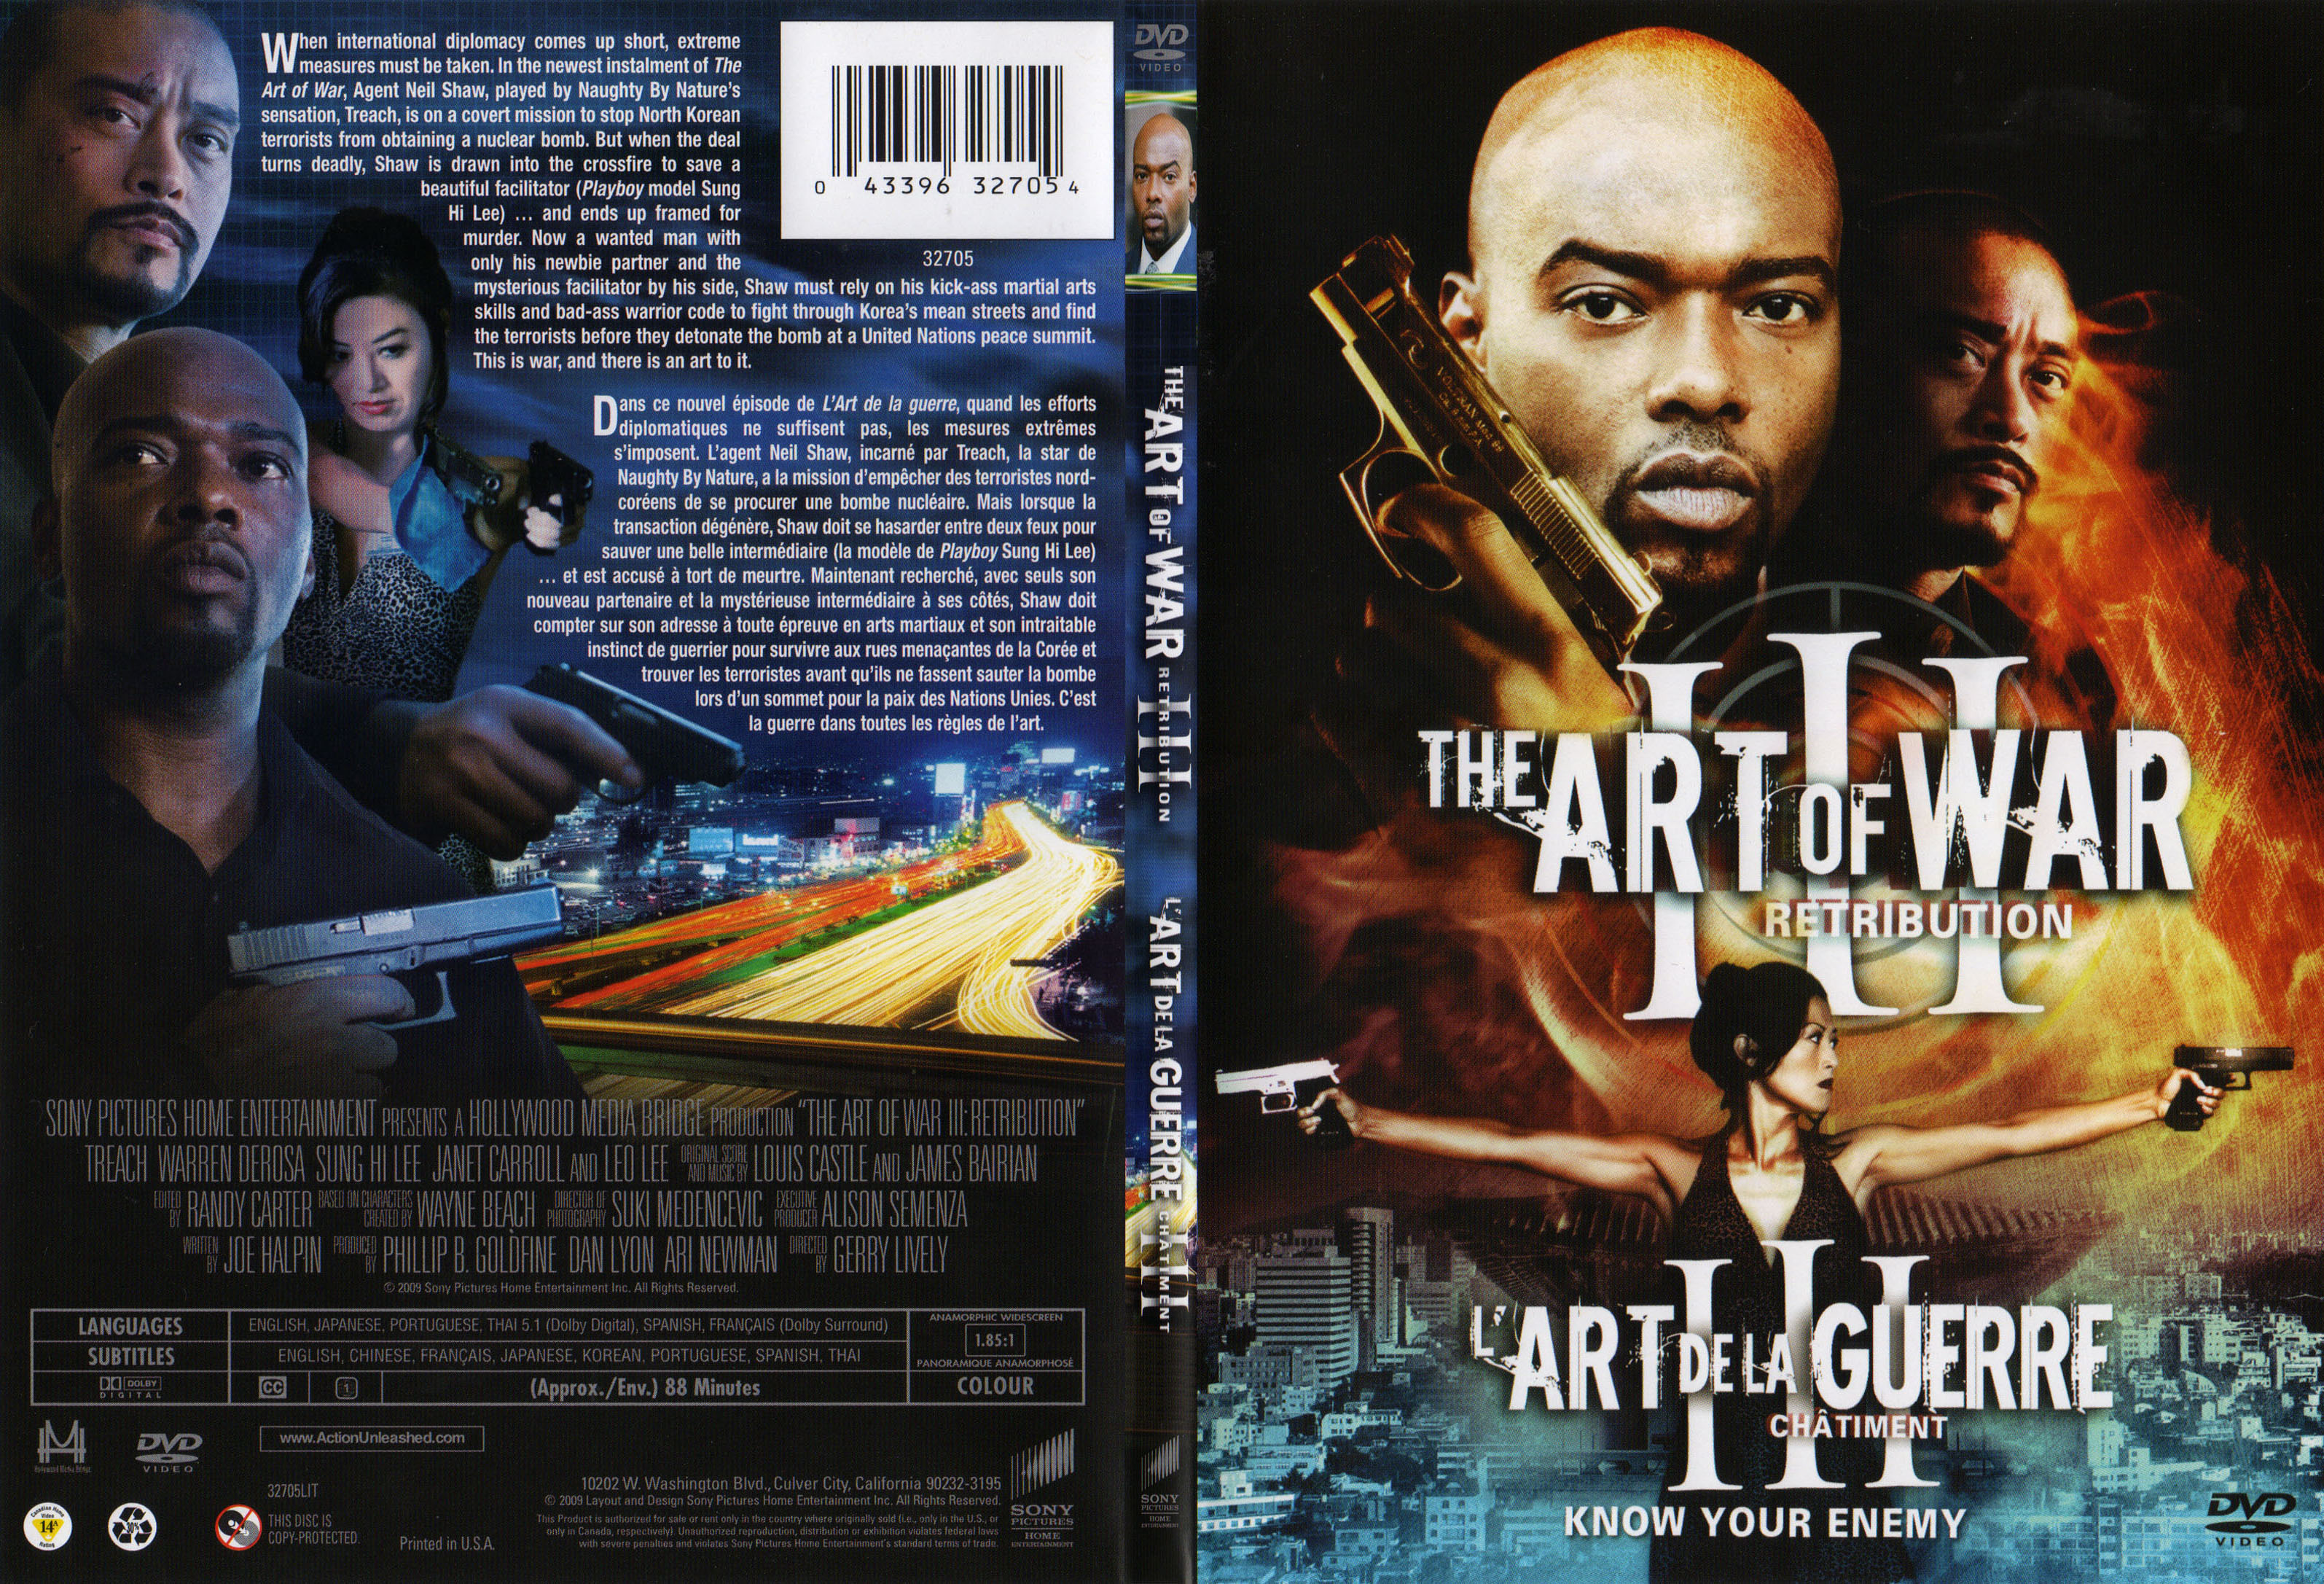 Jaquette DVD The art of war 3 Retribution - L